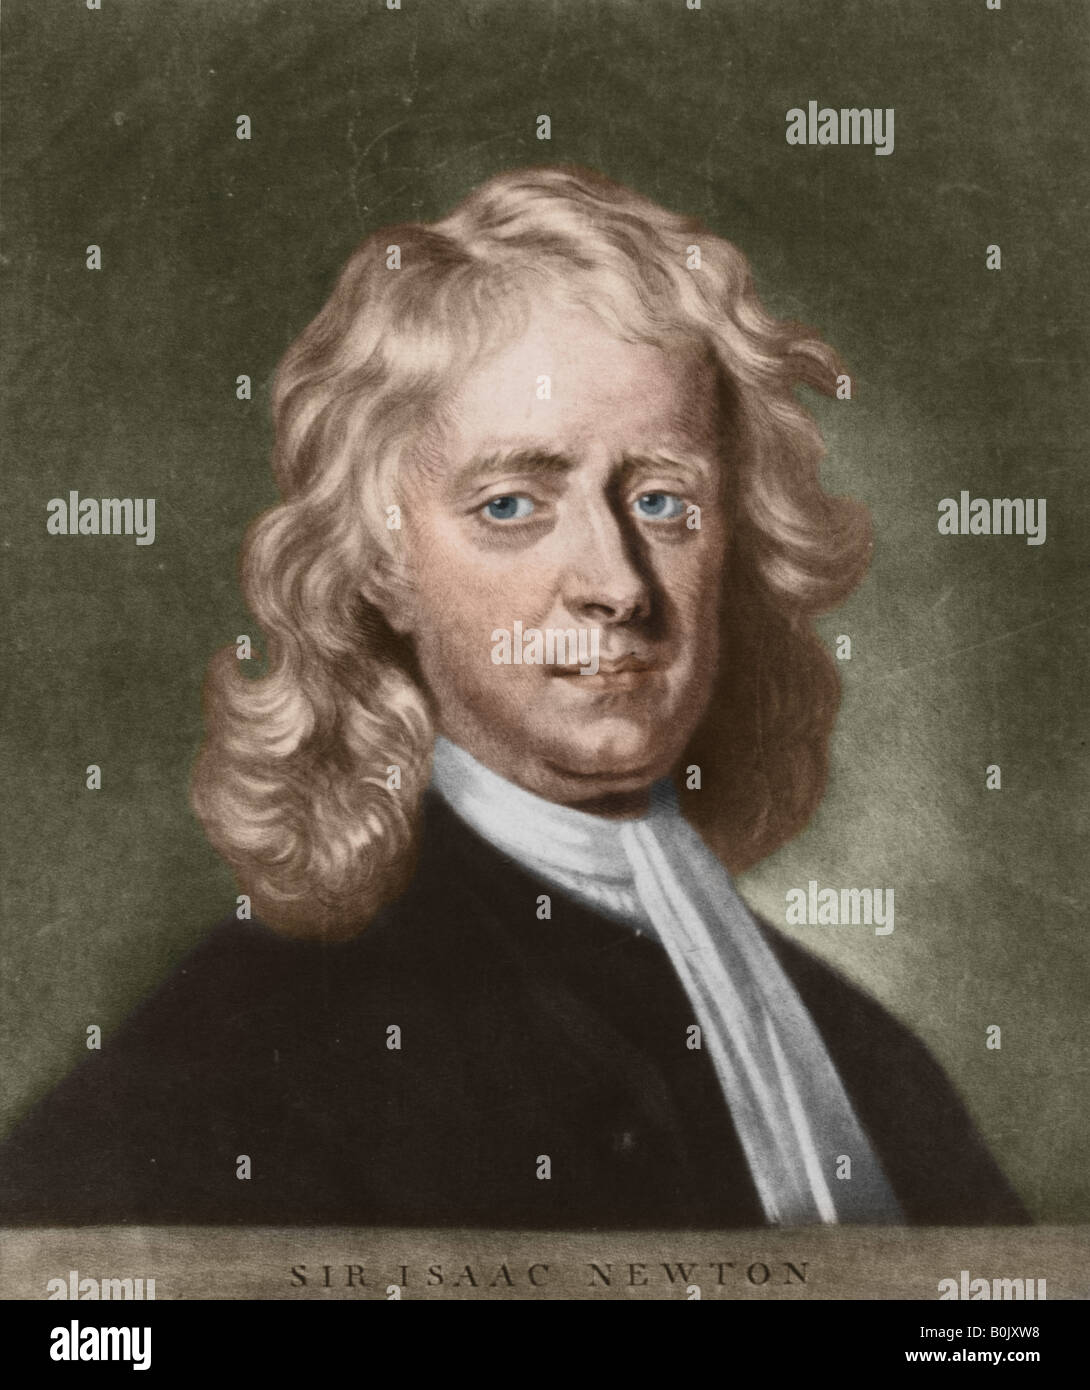 Sir Isaac Newton, 1642 - 1727, English physicist, mathematician and alchemist. Stock Photo